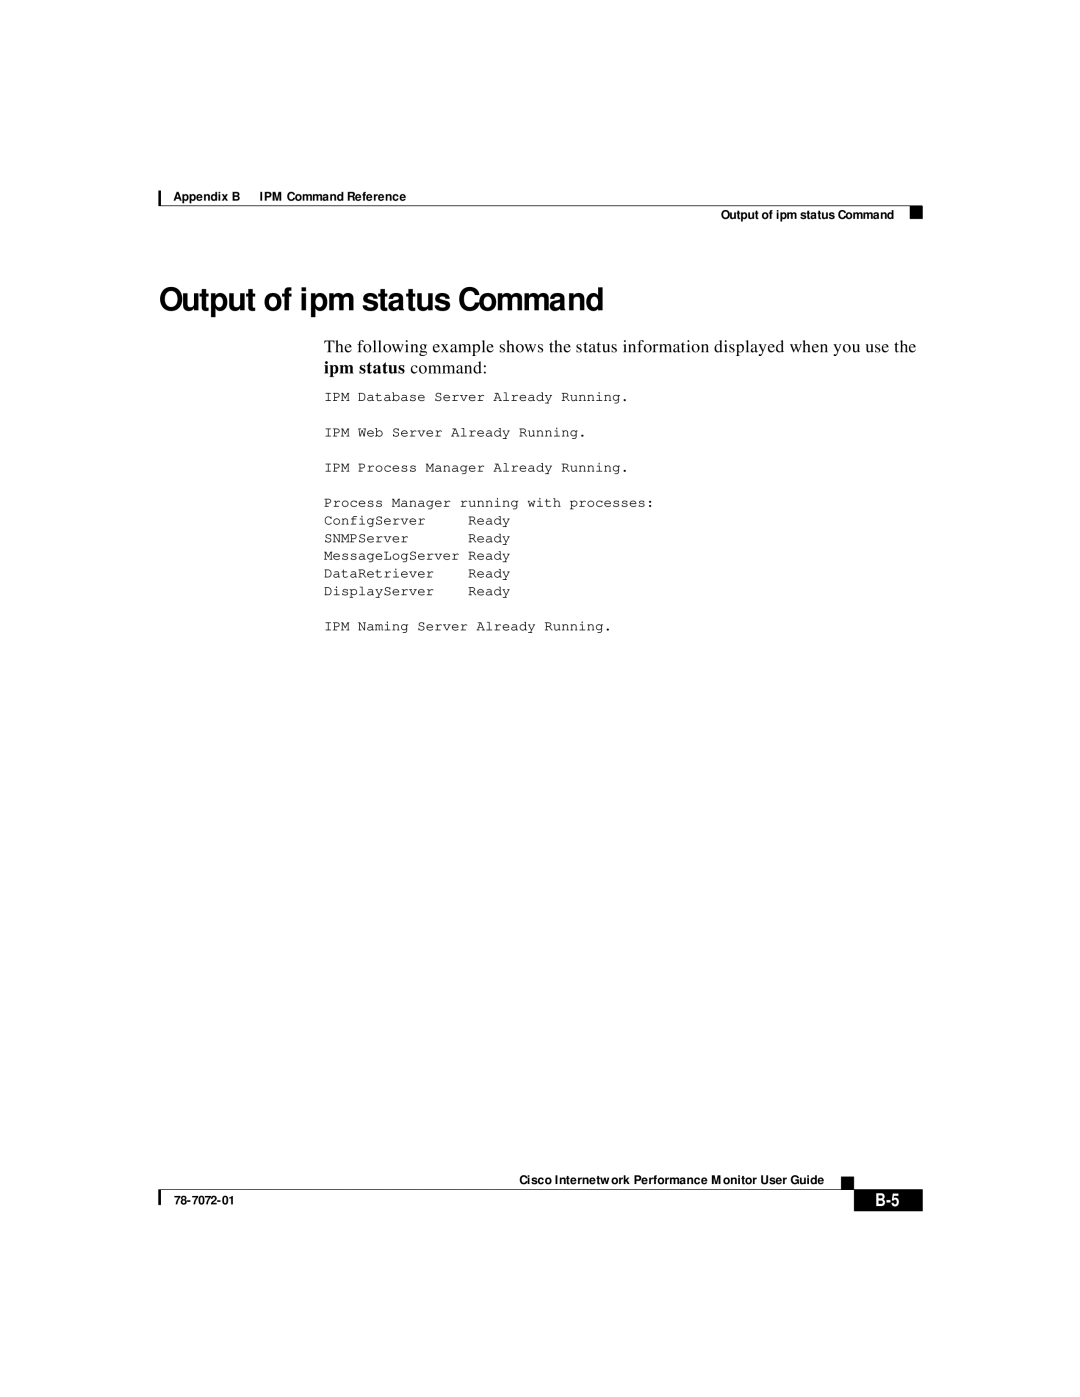 3Com 78-7072-01 appendix Output of ipm status Command, ipm status command, Appendix B IPM Command Reference 